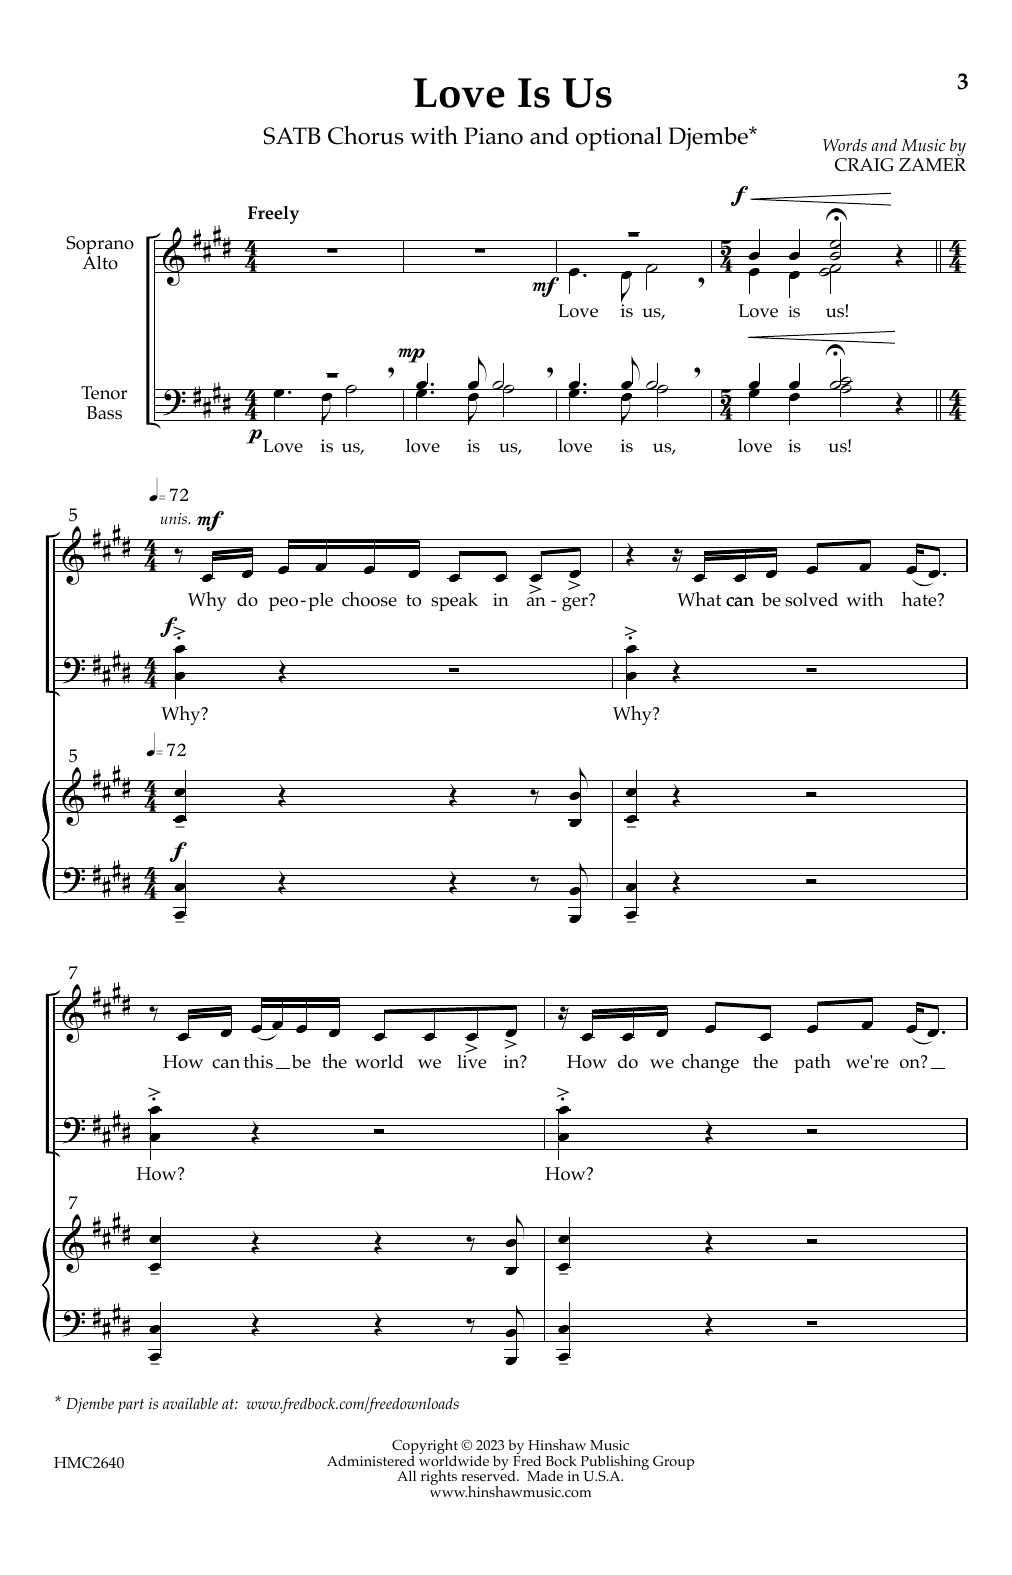 Craig Zamer Love Is Us Sheet Music Notes & Chords for SATB Choir - Download or Print PDF